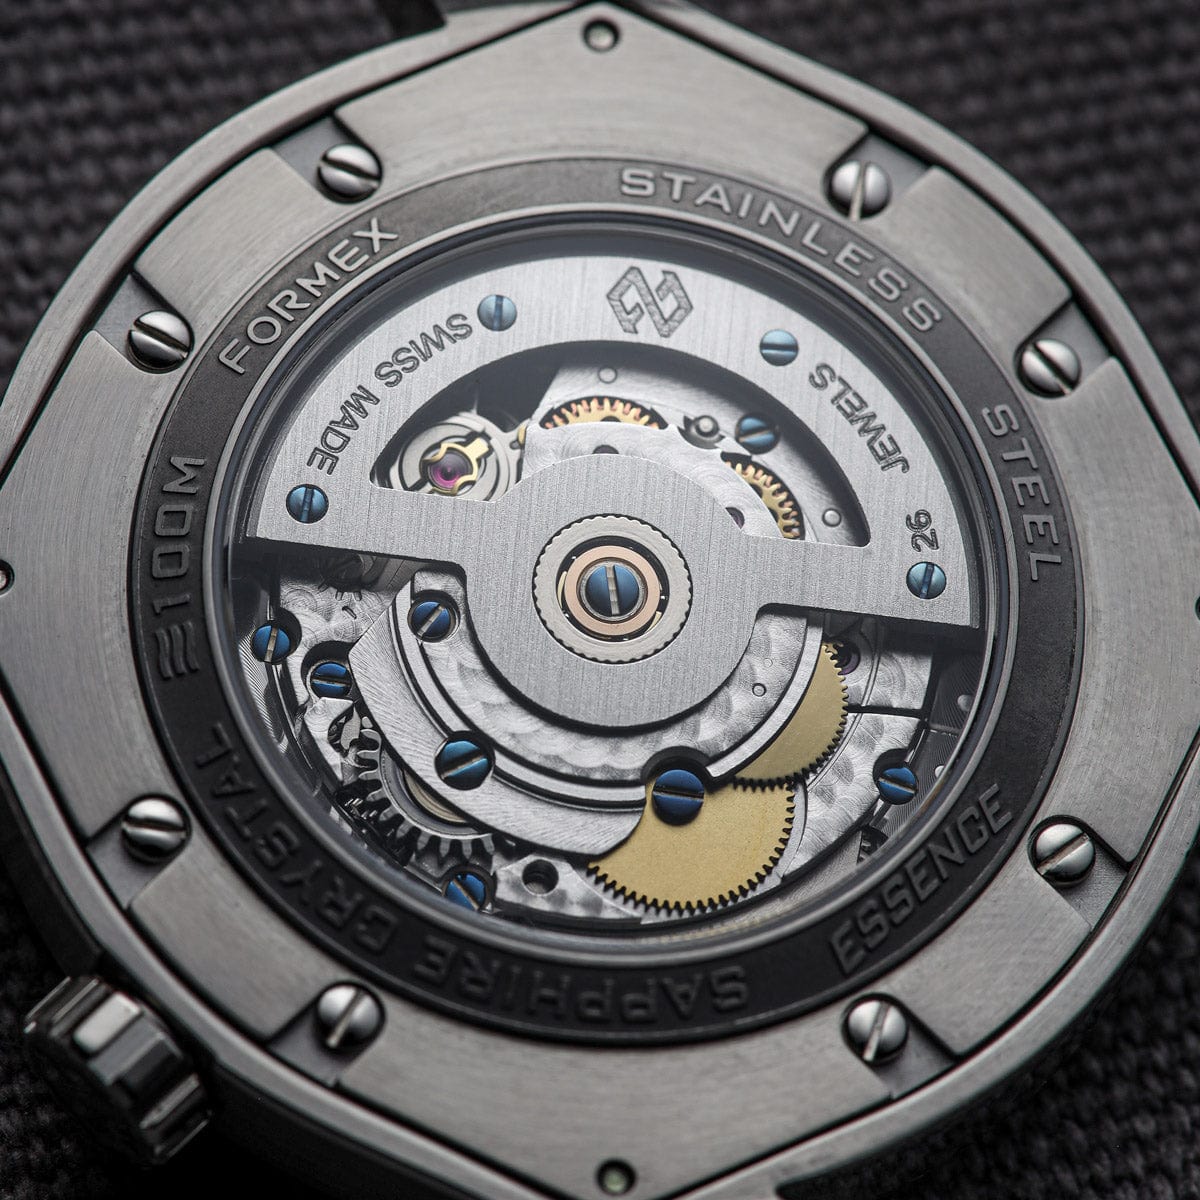 Formex Essence 39 Automatic Chronometer Watch - Blue / Steel Bracelet